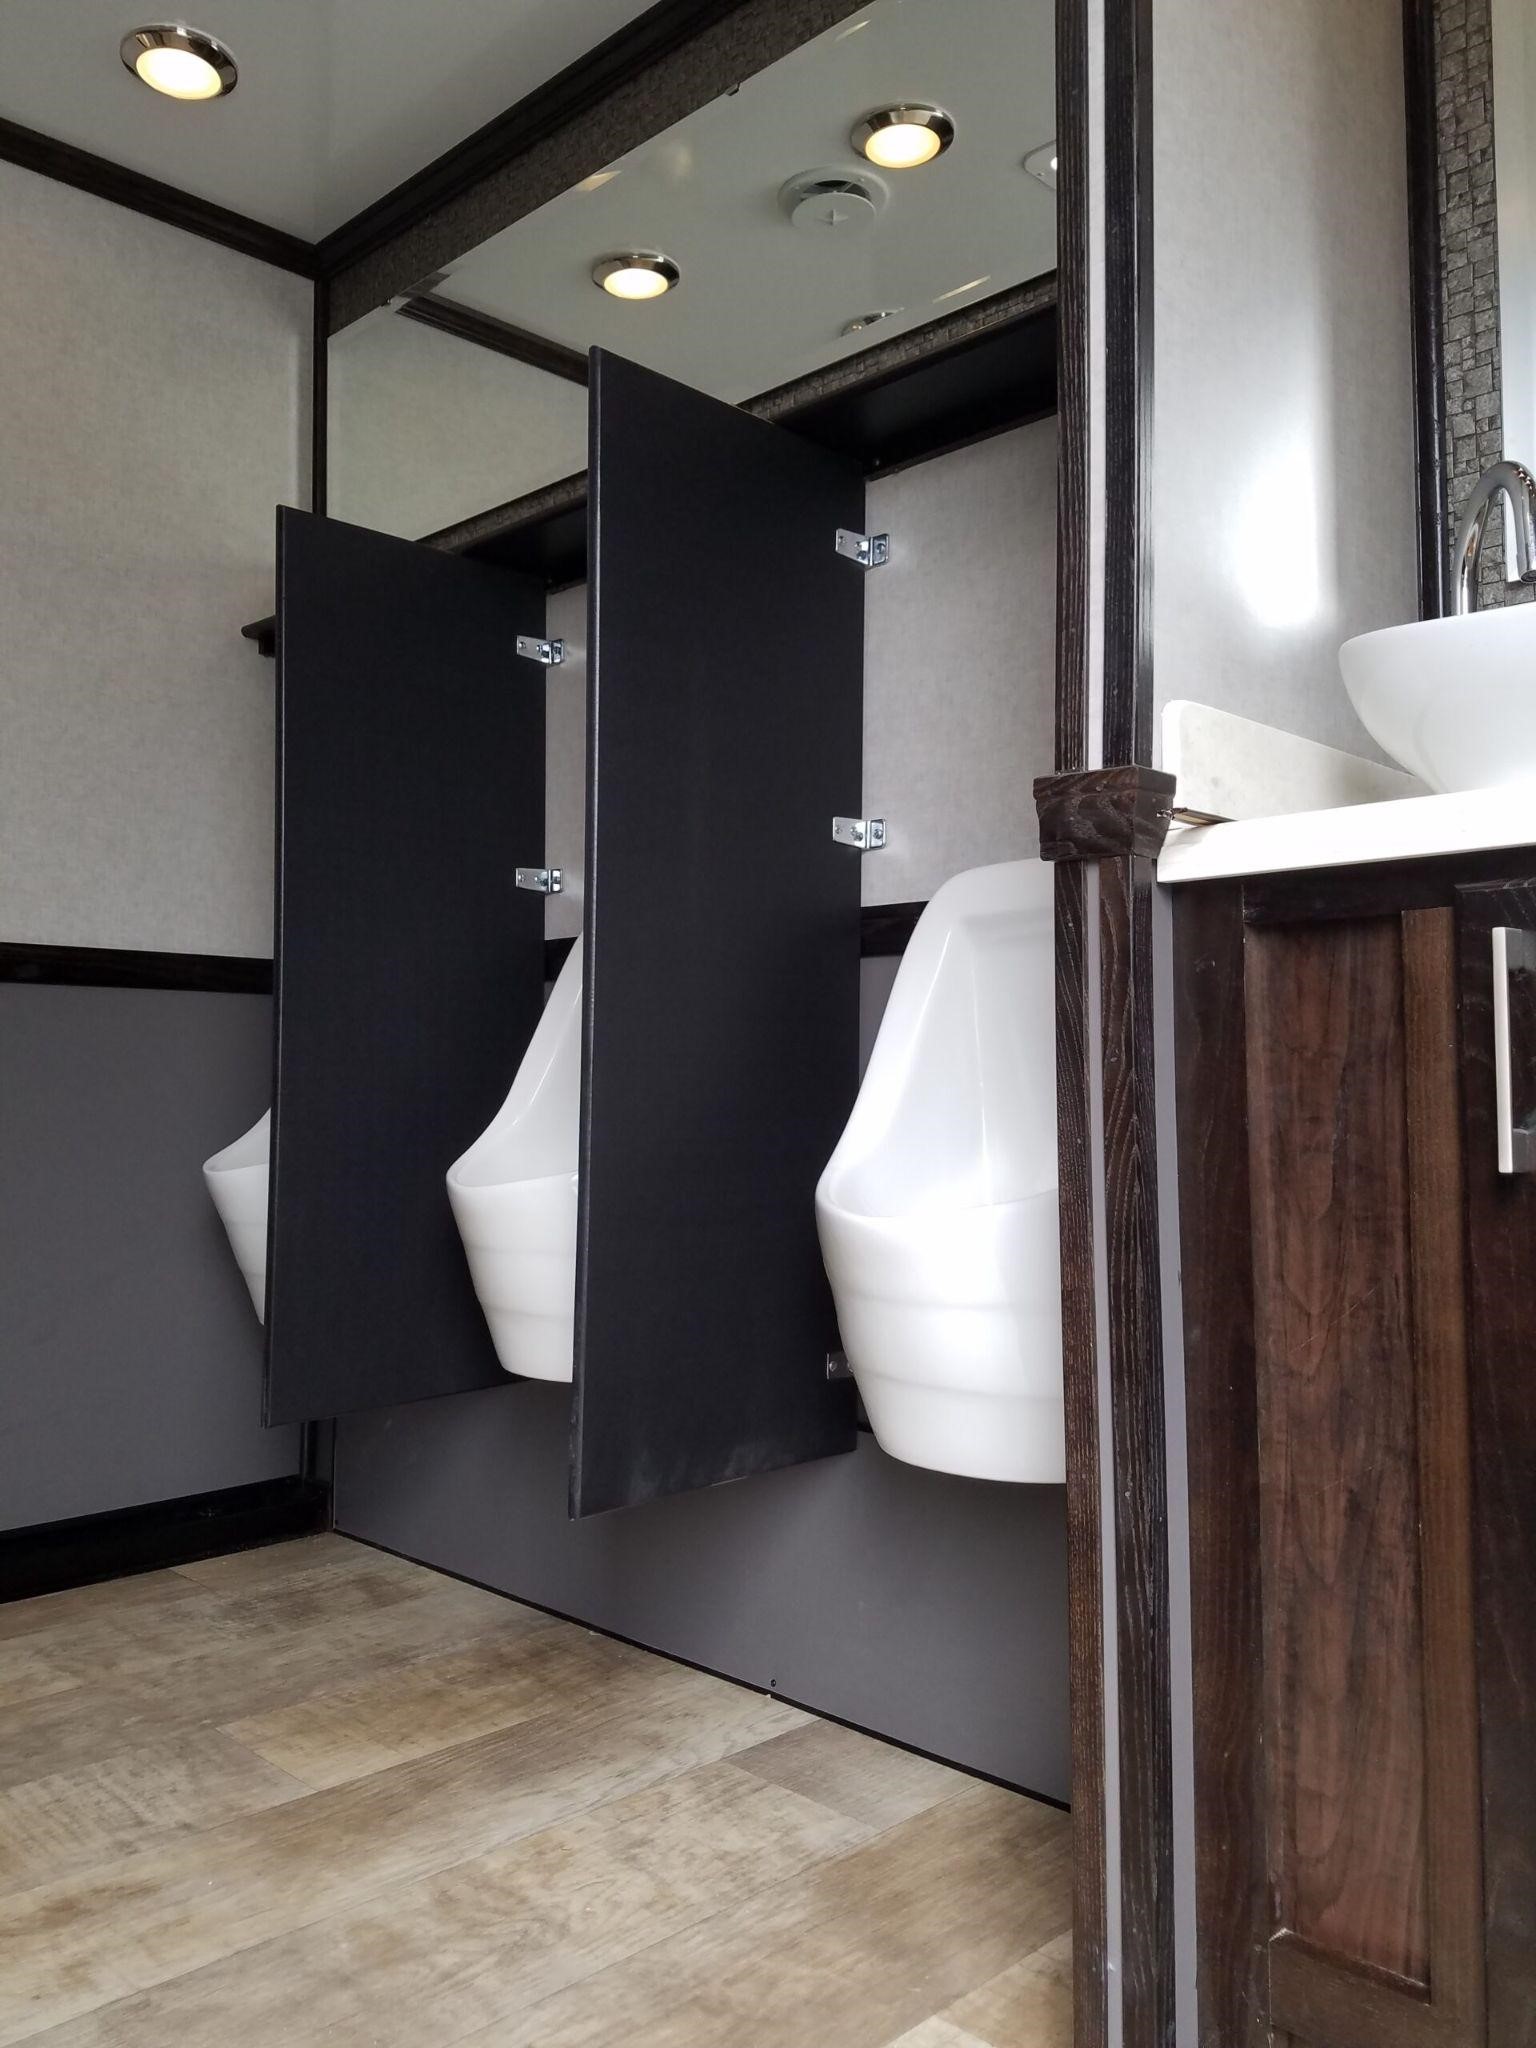 urinals in restroom trailer